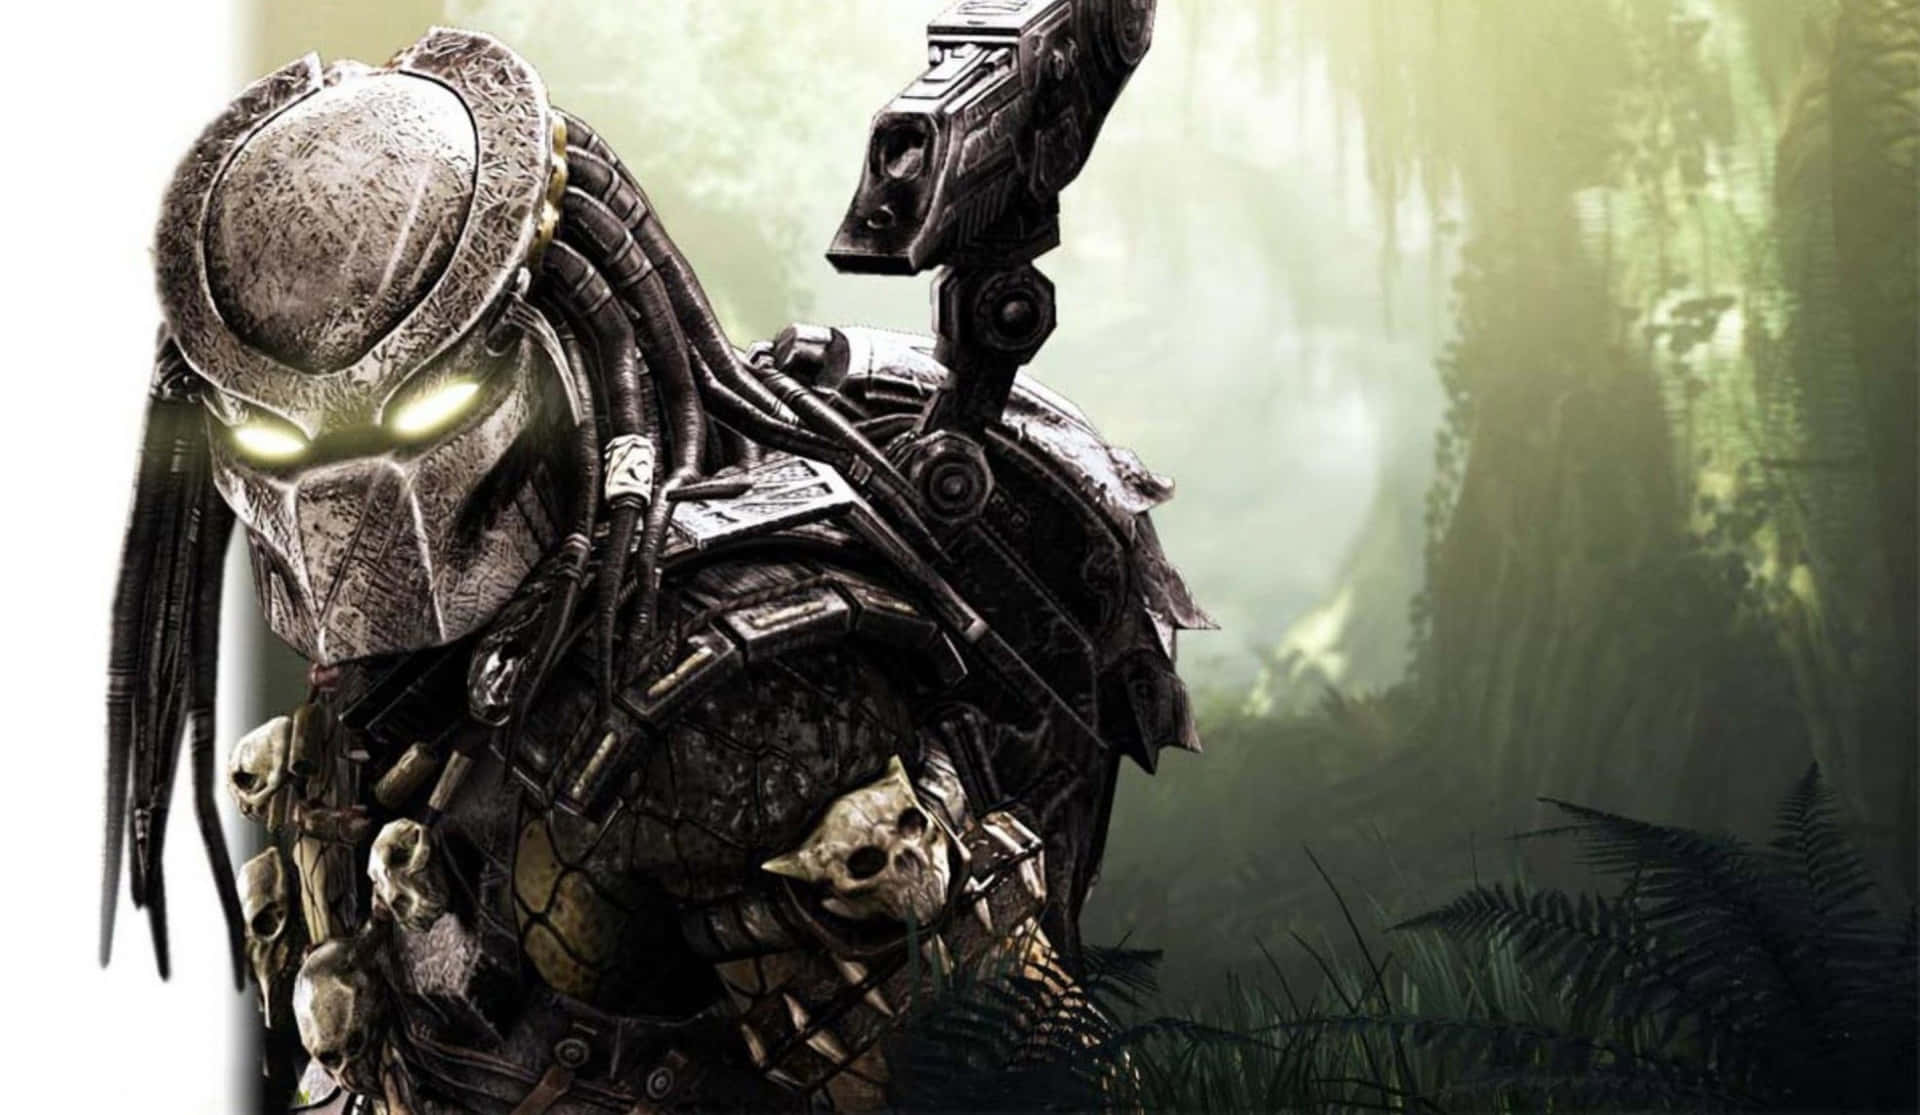 Download Alien Vs Predator Celtic And Grid Faces Wallpaper